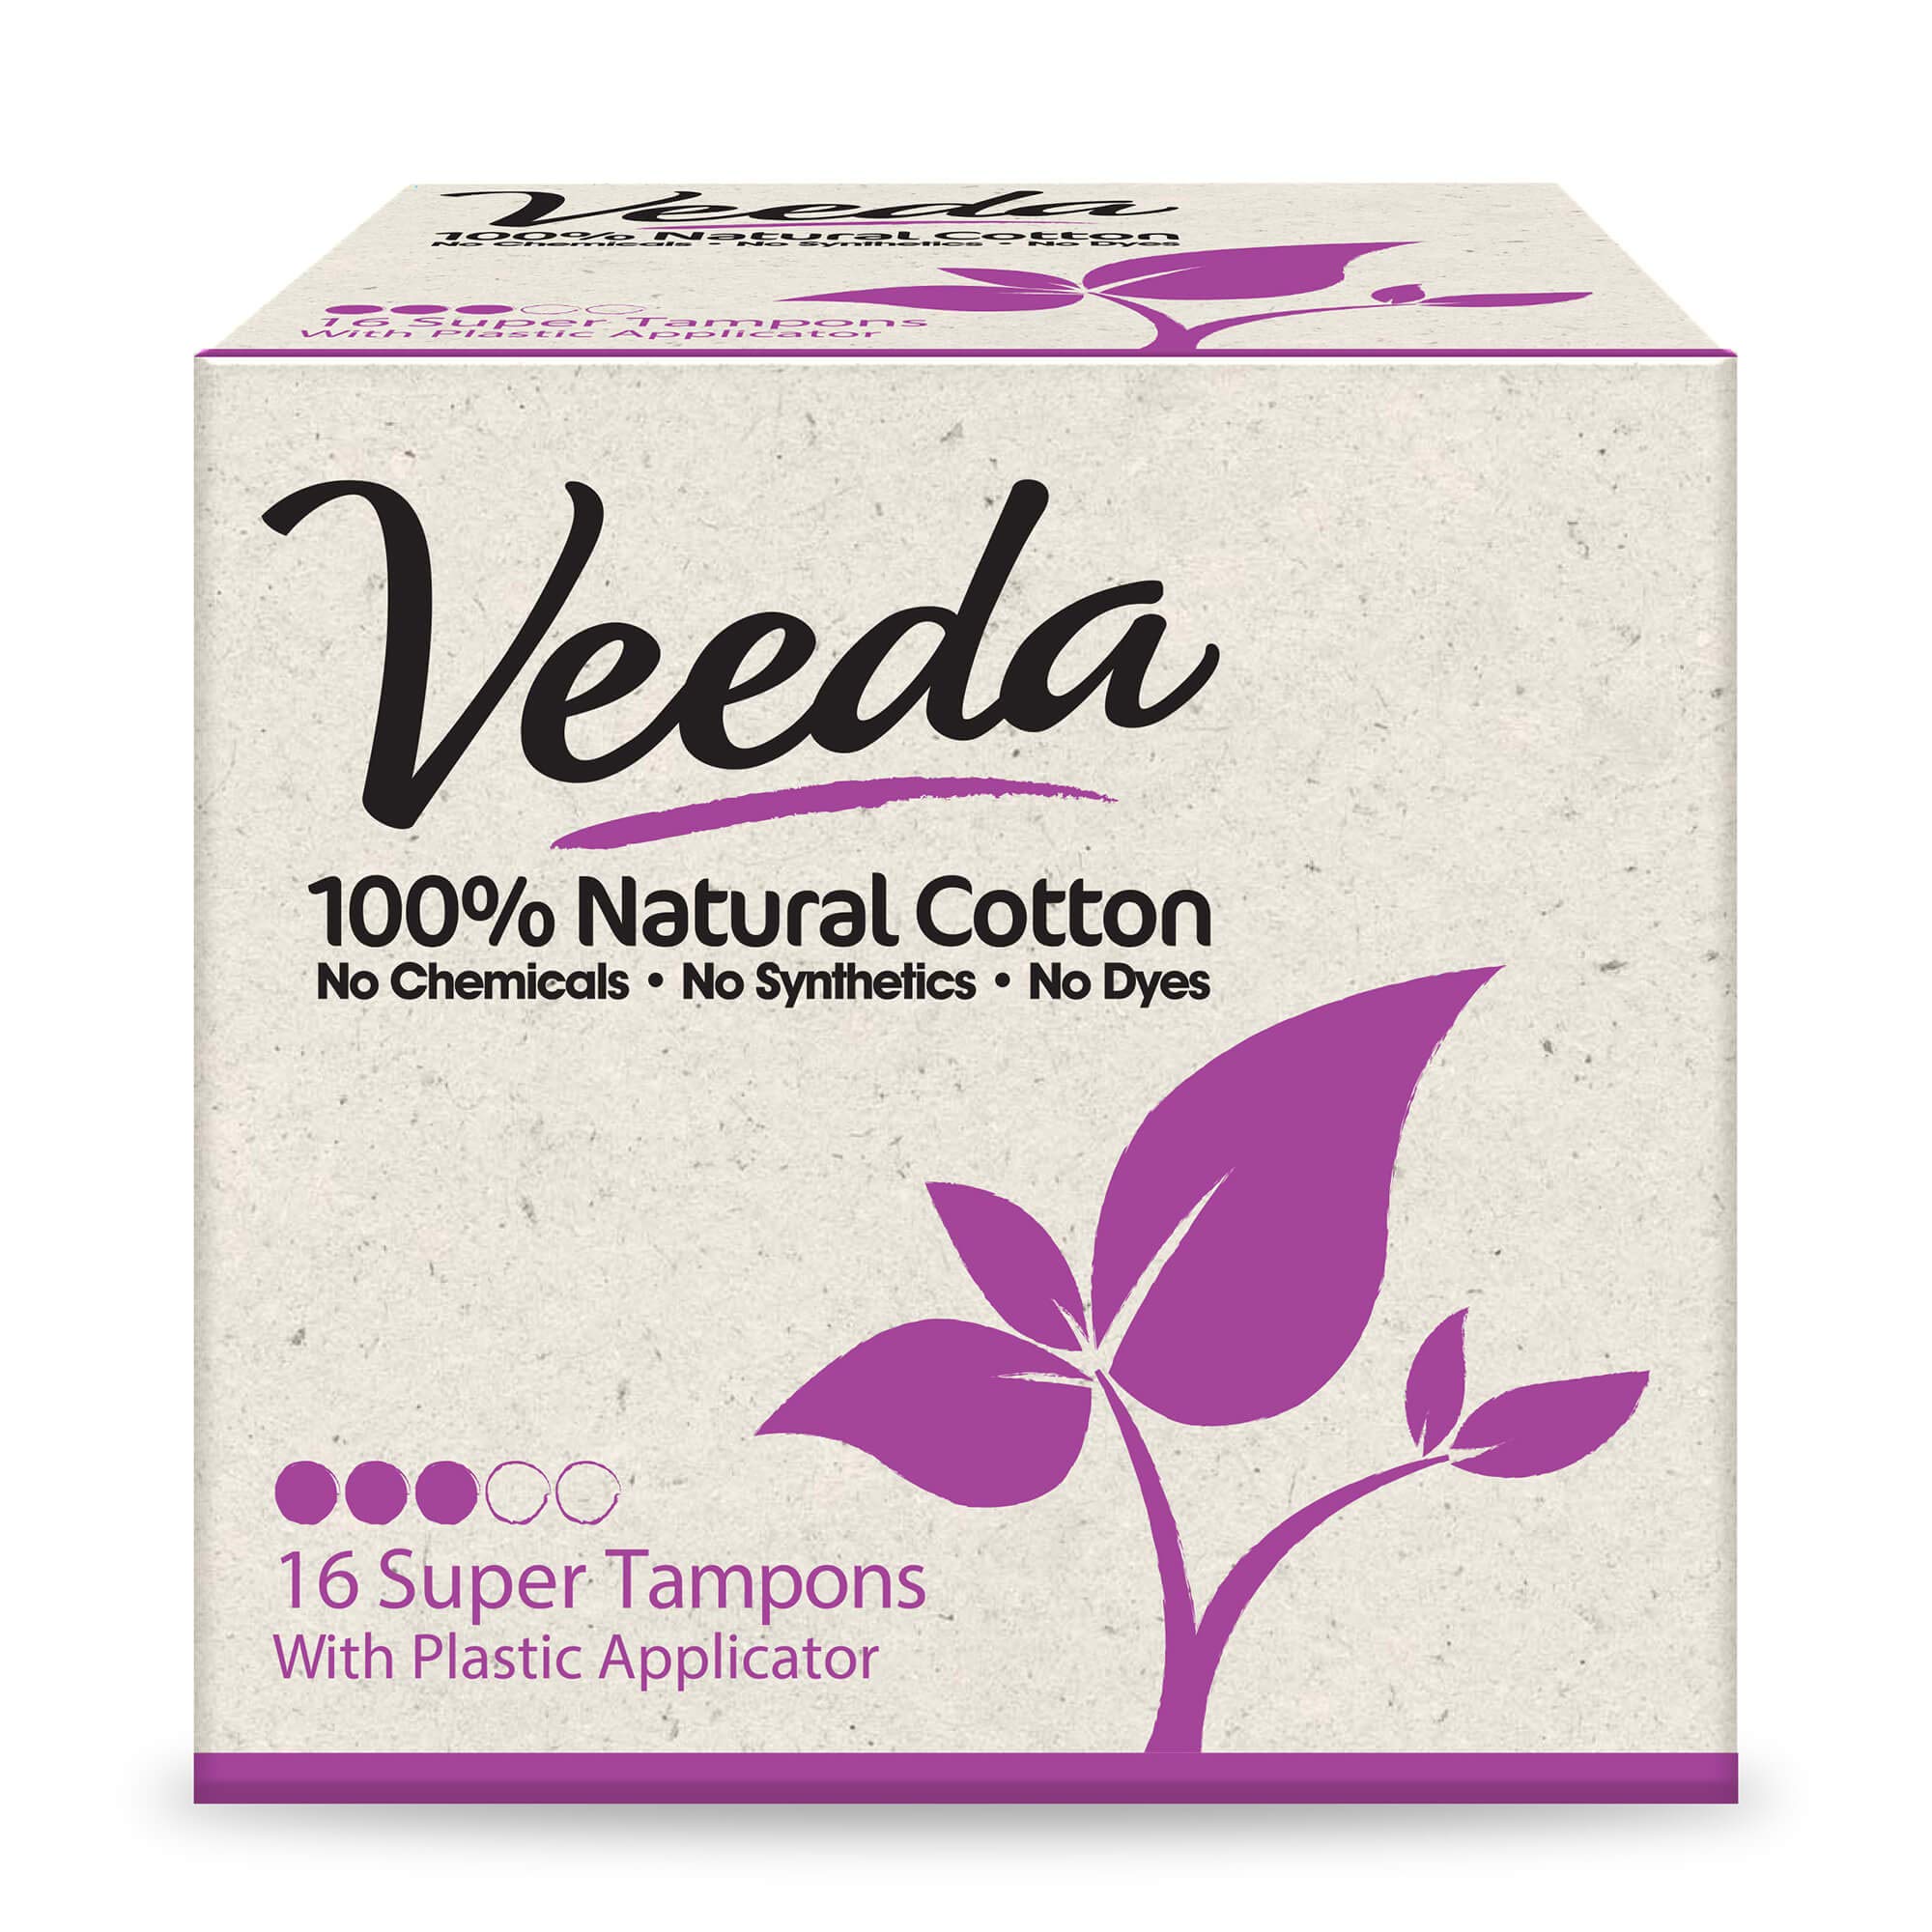  Veeda 100% Natural Cotton Compact BPA-Free Applicator  Tampons Chlorine